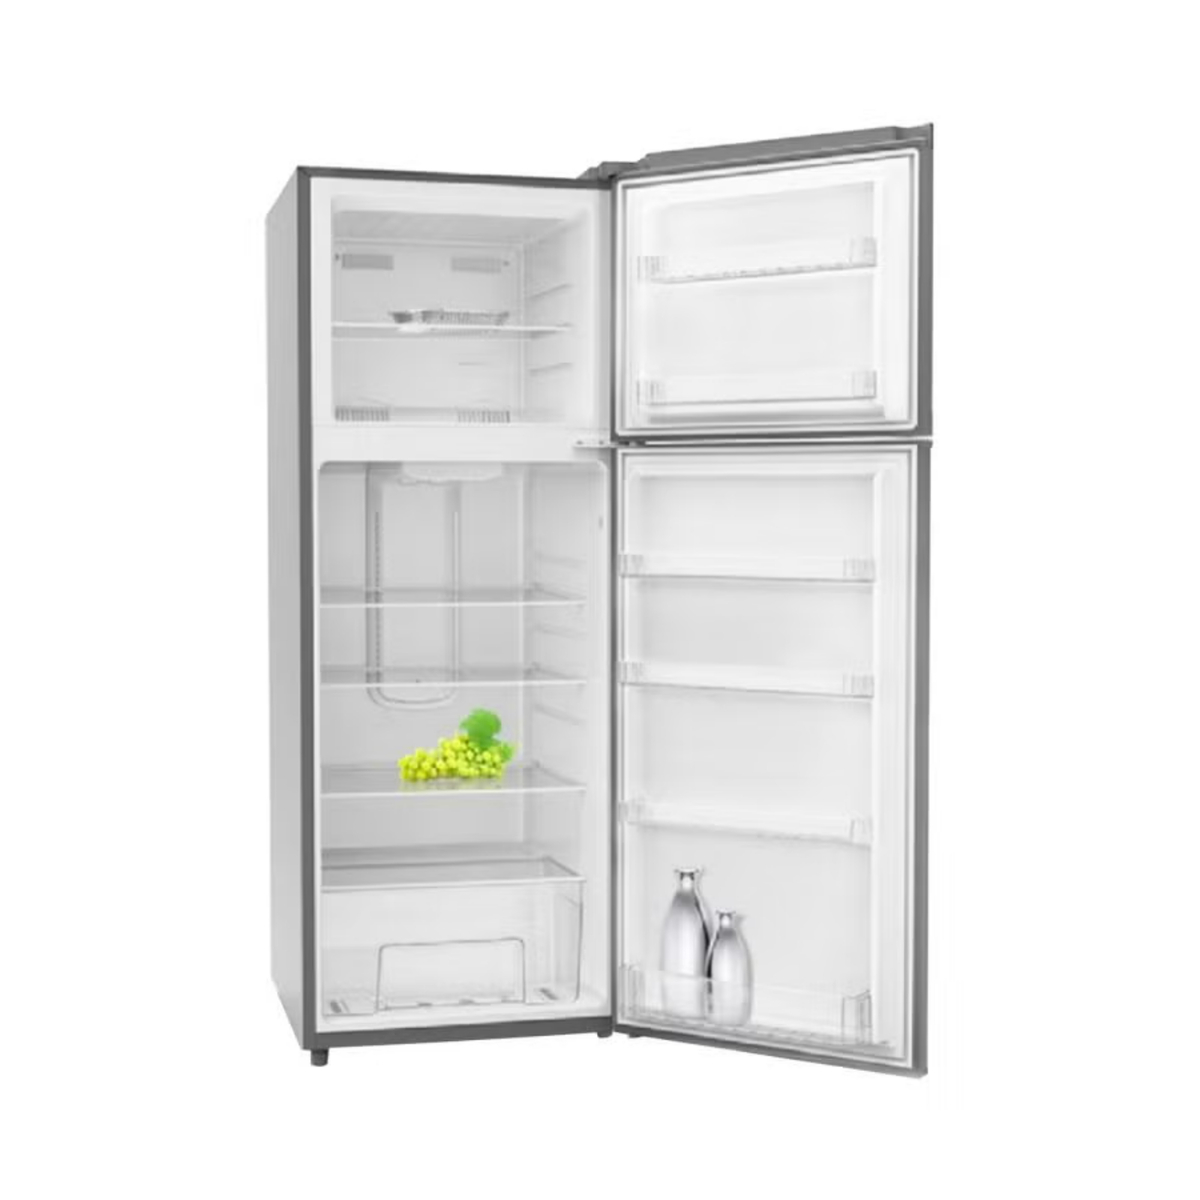 Aftron Double Door Refrigerator, 225 L, Stainless Steel, AFR320SSF